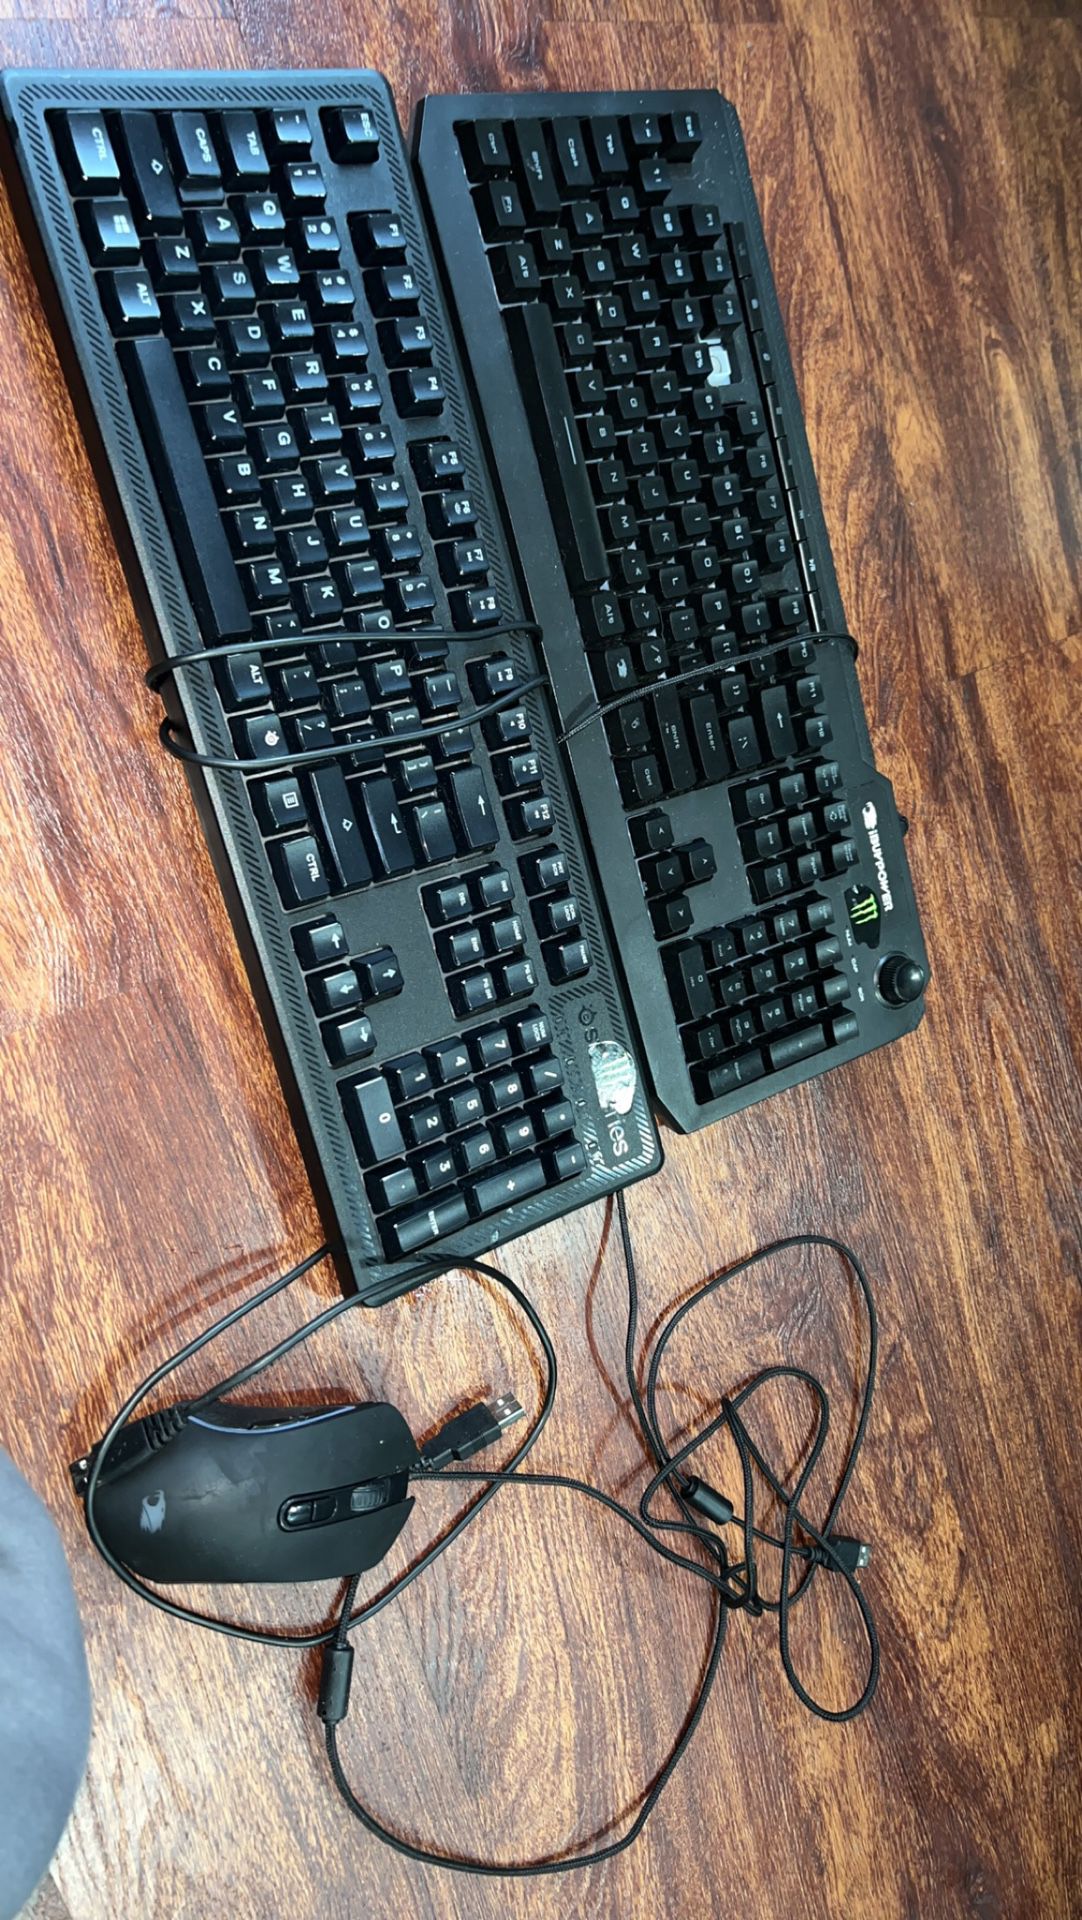 1 iBuypower Keyboard, Steelseries Keyboard And iBuypower Mouse